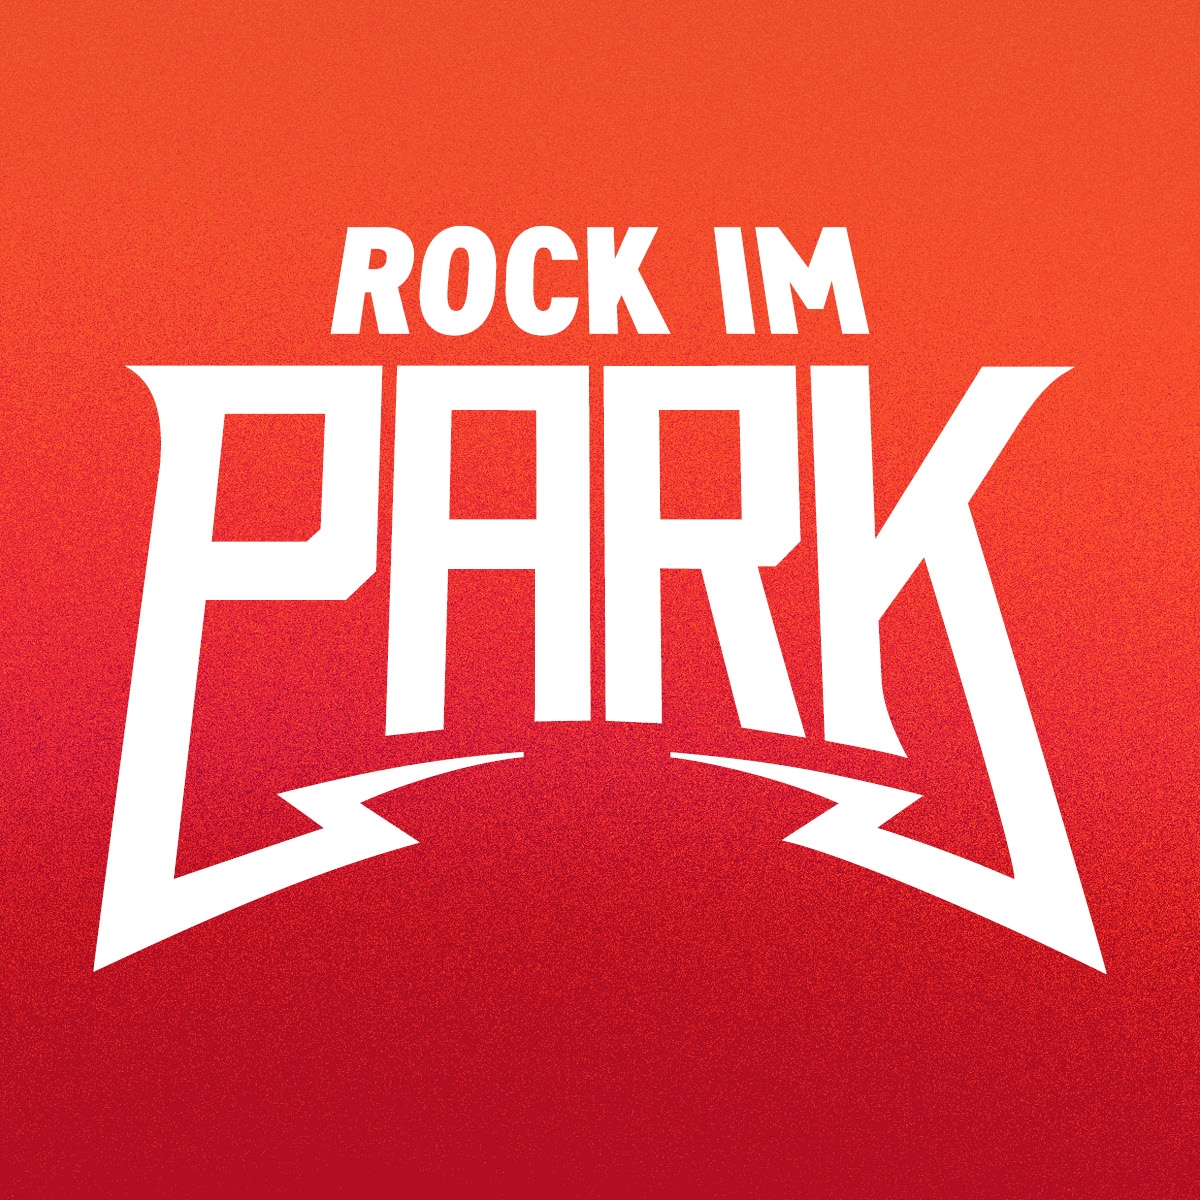 Rock im Park Logo